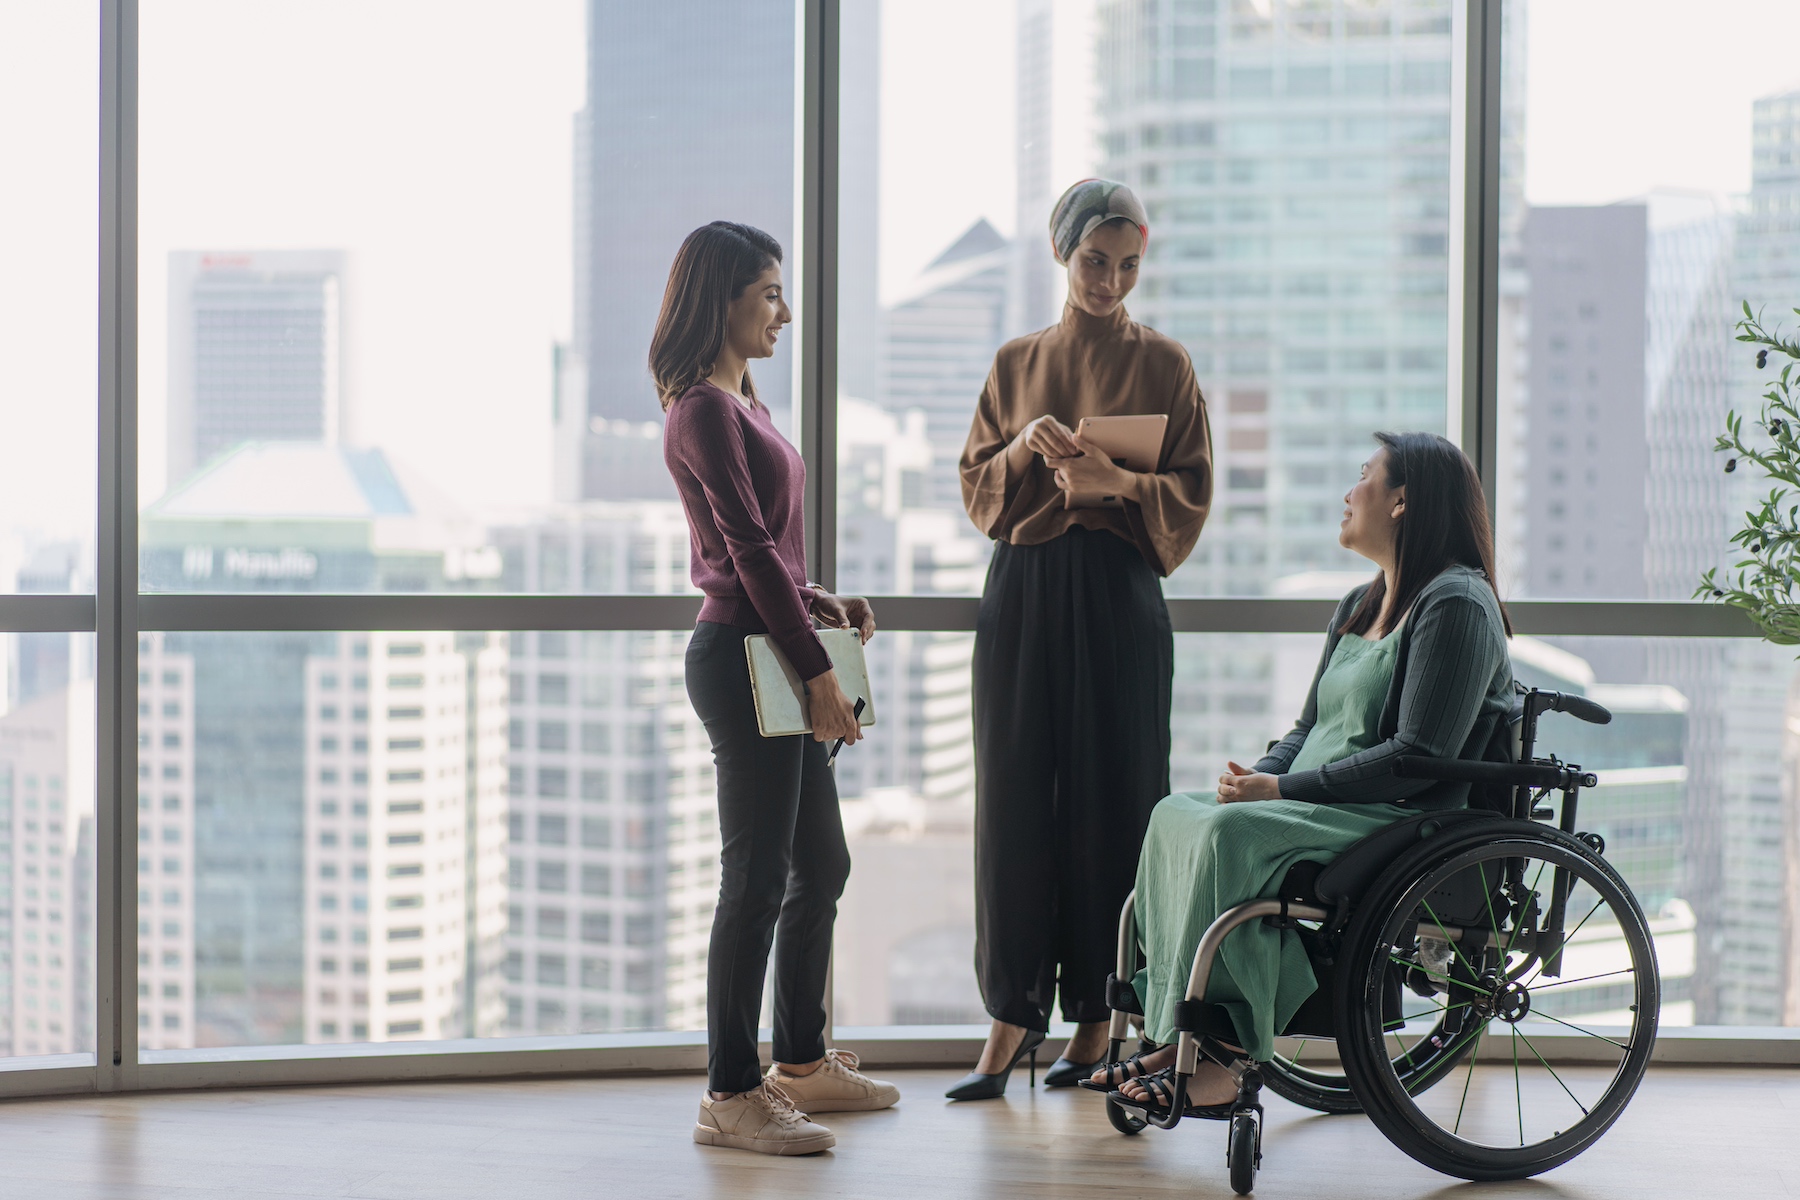 Three women discuss work matters near a window overlooking the Singapore skyline